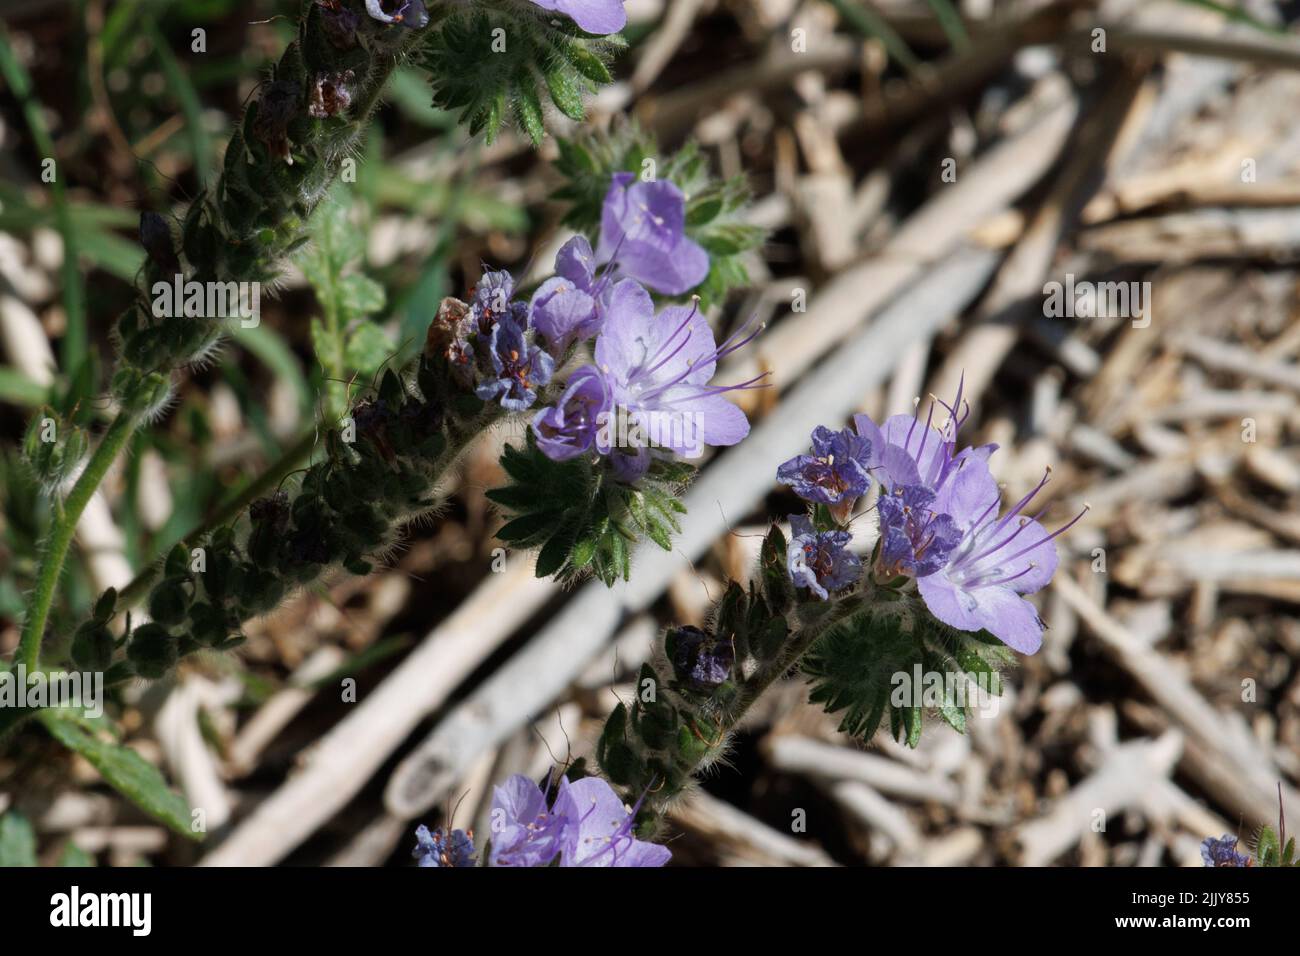 Purple flowering determinate helicoid cyme inflorescences of Phacelia Distans, Boraginaceae, native annual in the Anza Borrego Desert, Springtime. Stock Photo